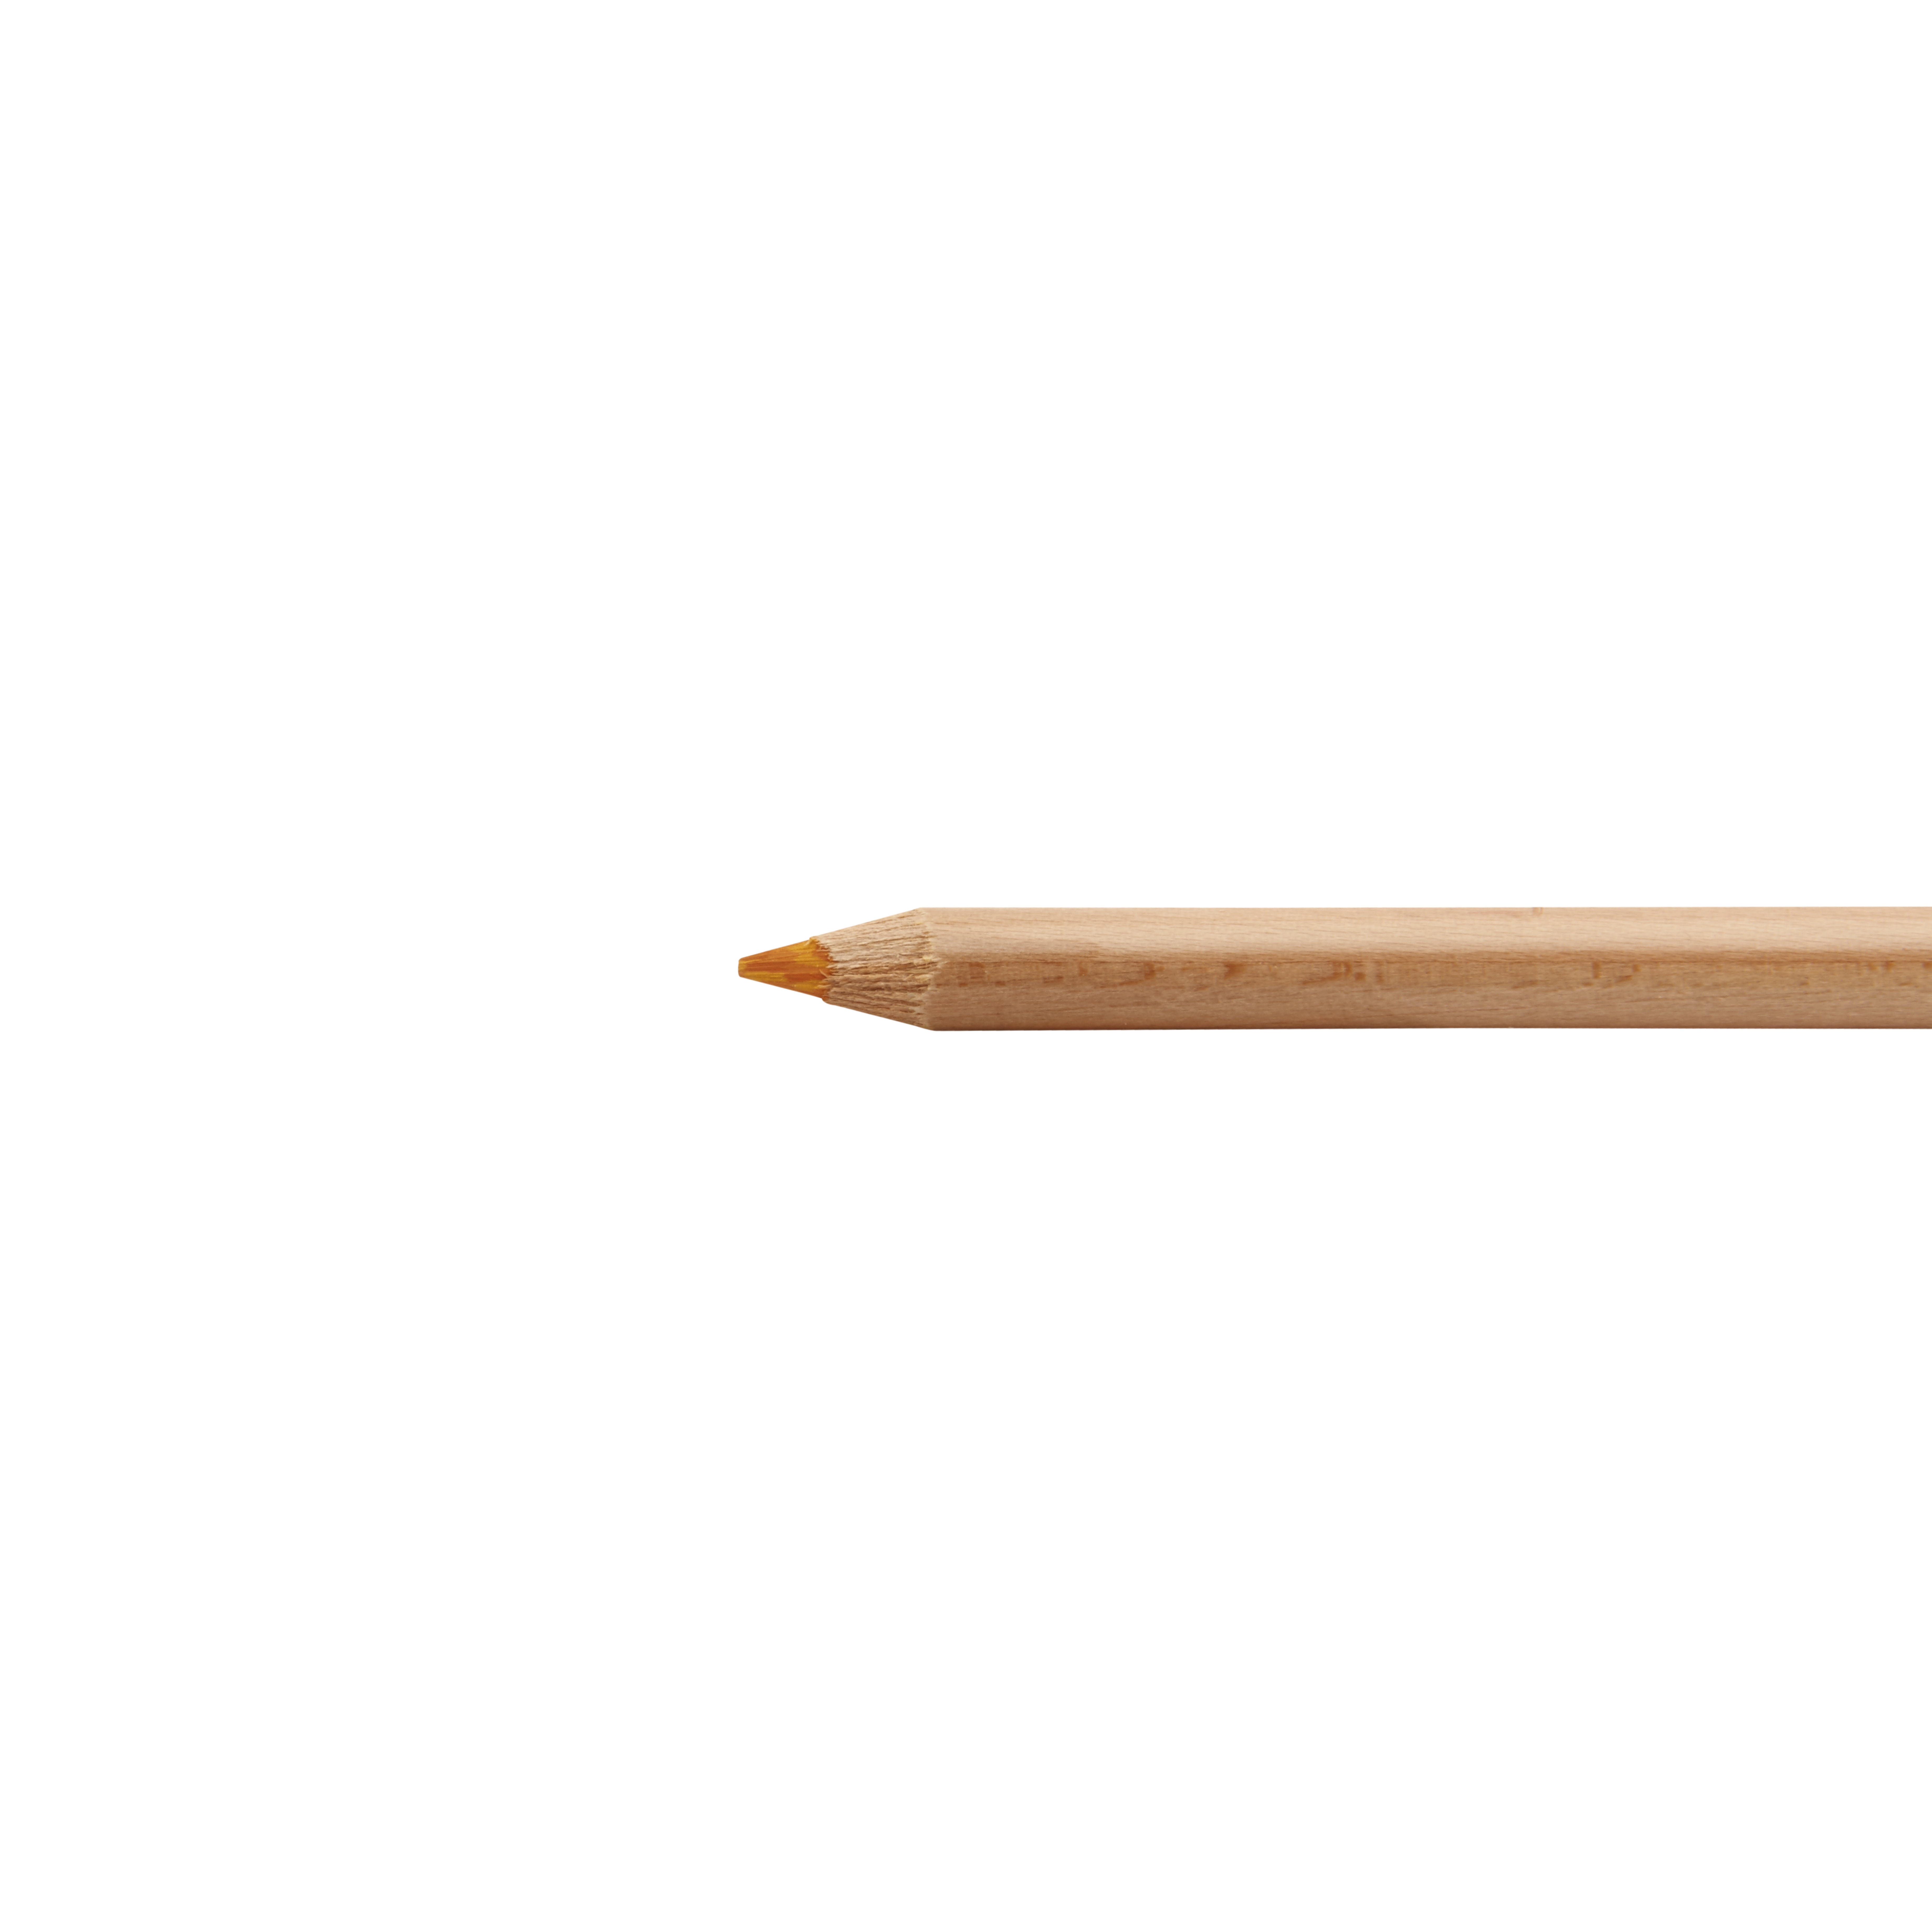 Tri-tone Colored Pencils Set – Shorthand